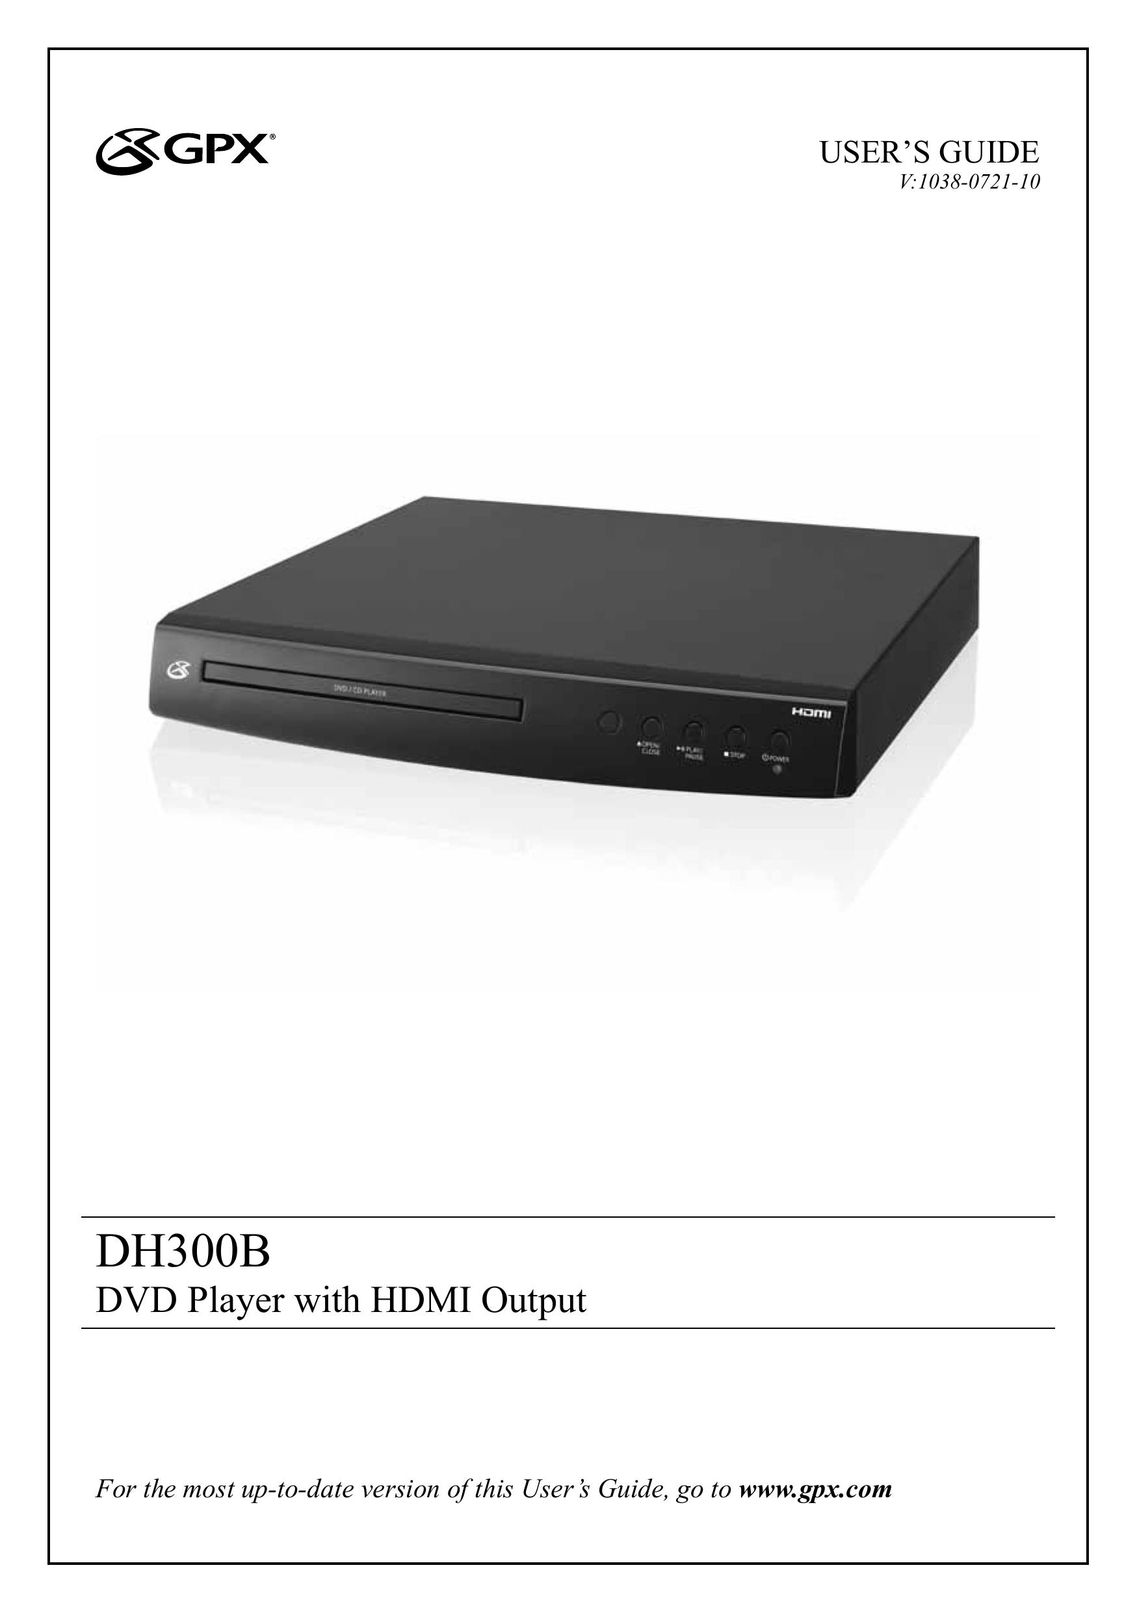 GPX DH300B DVD Player User Manual